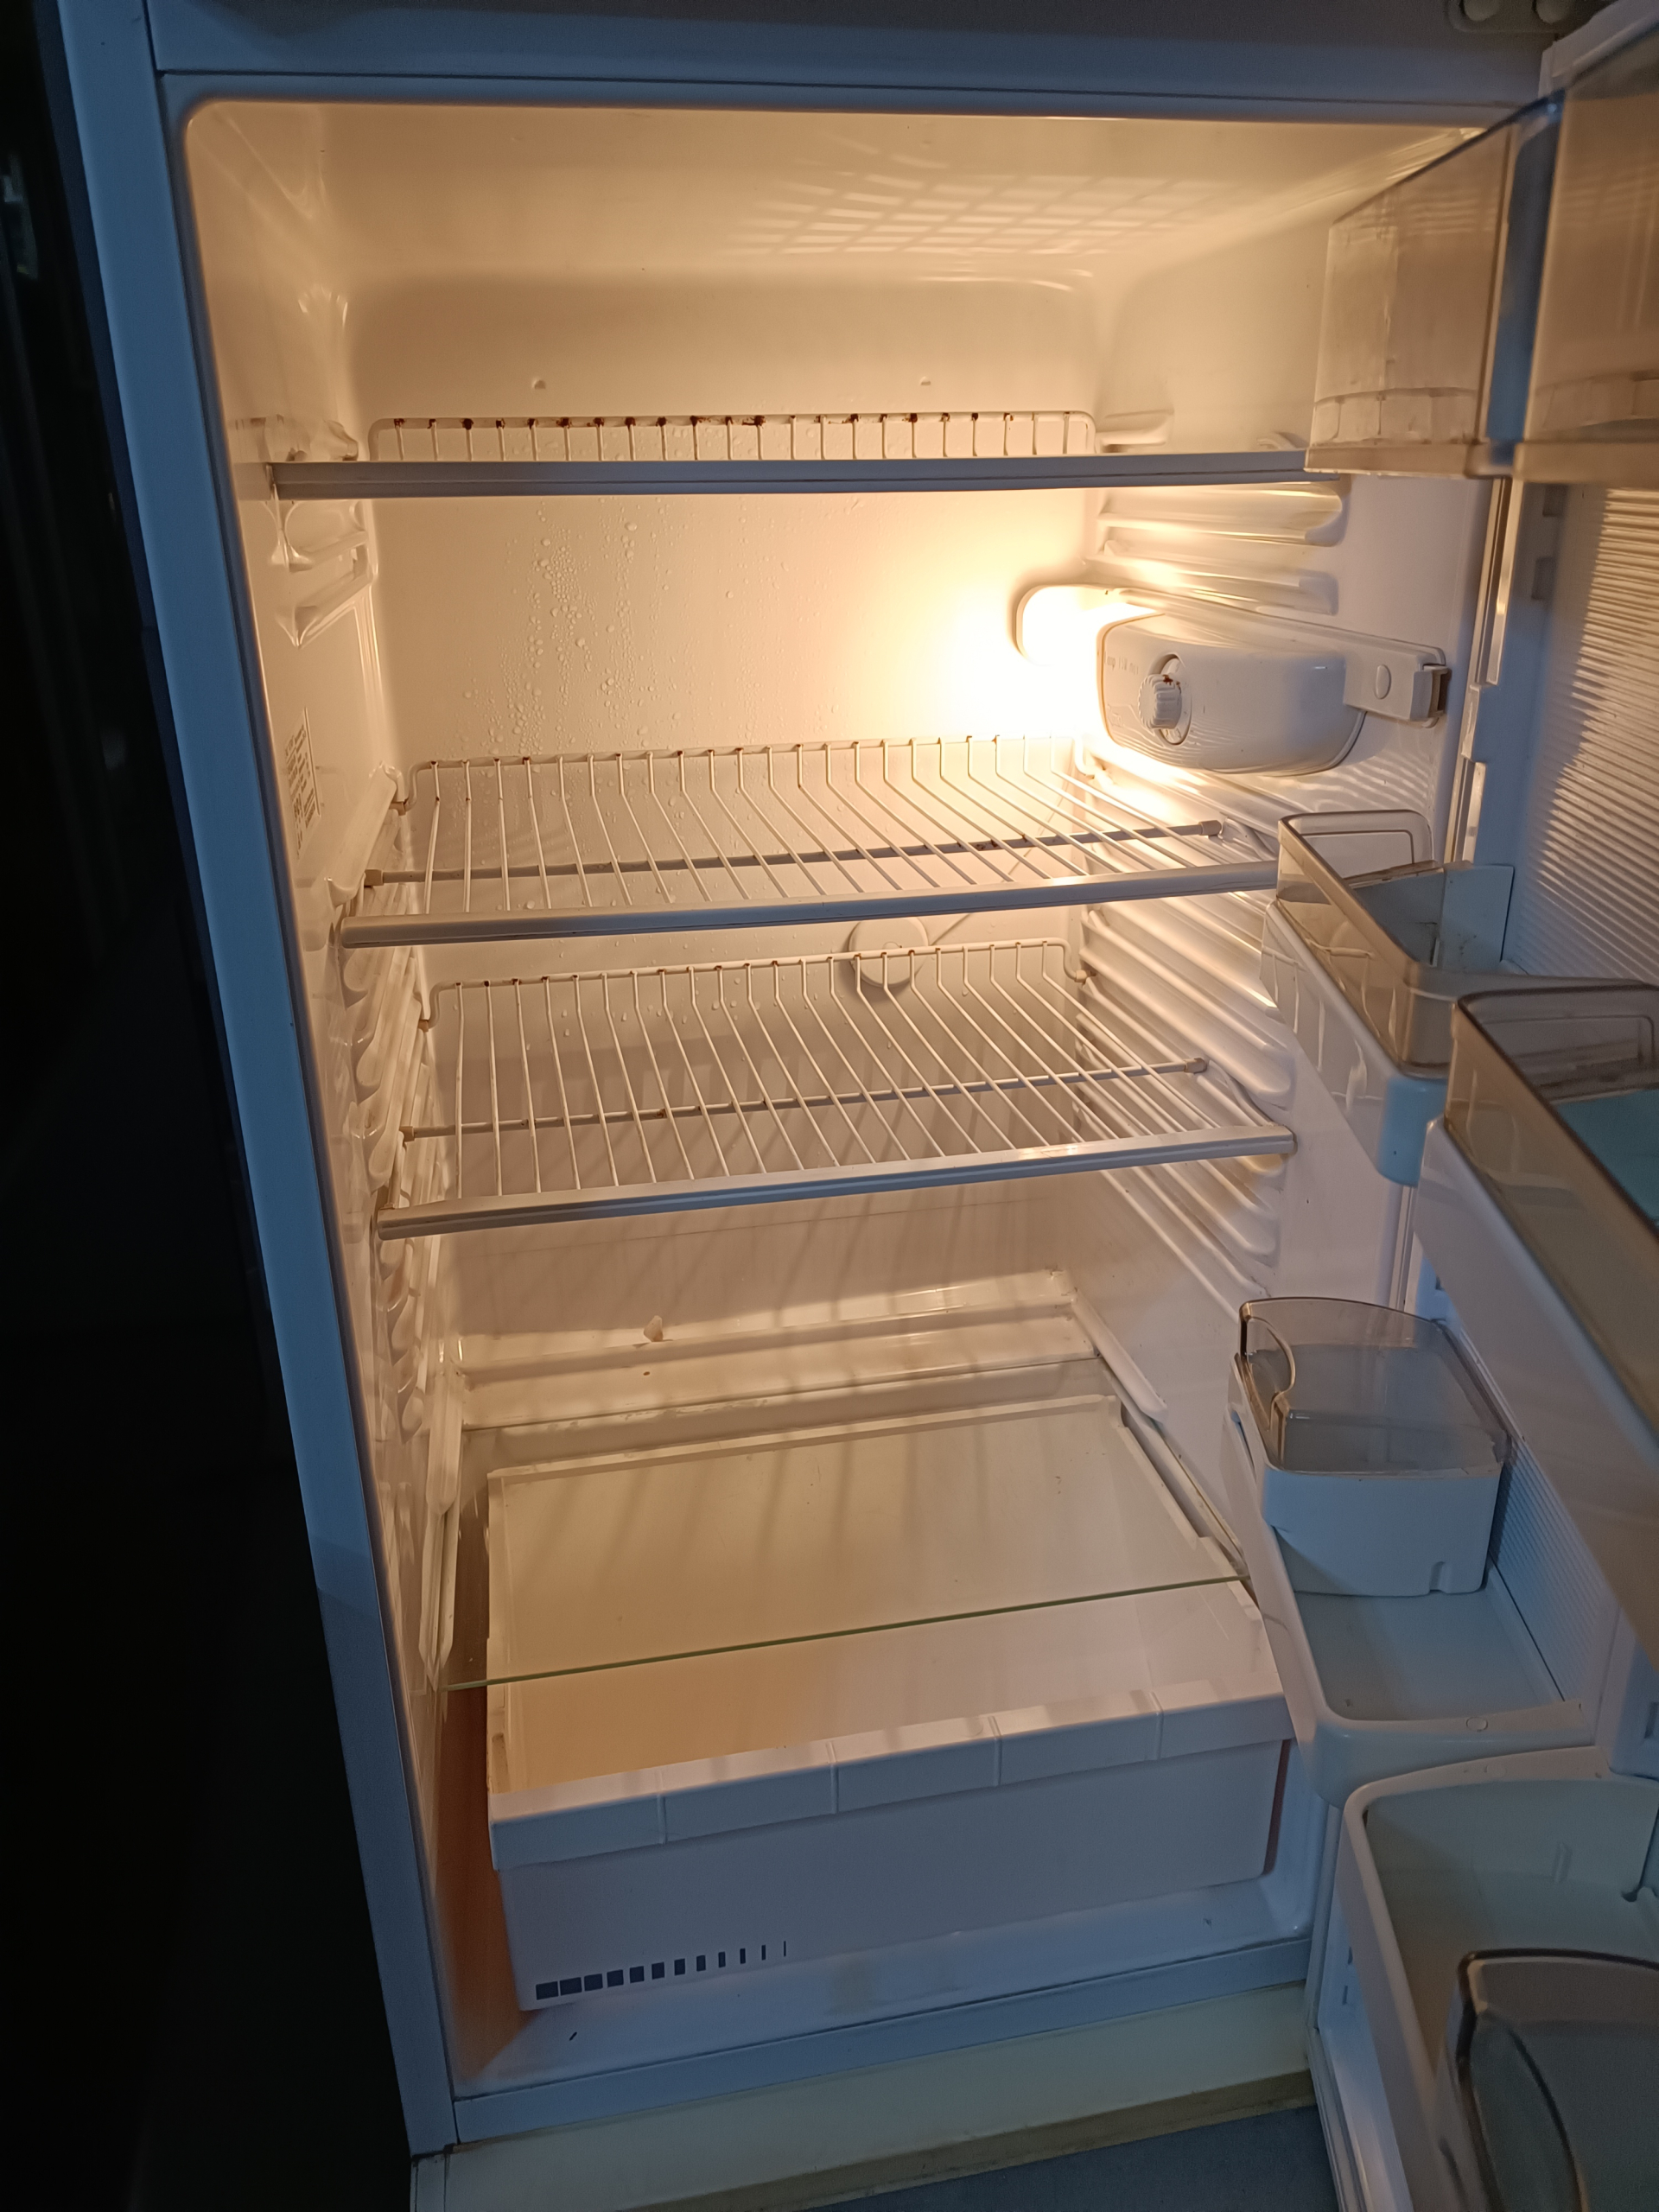 Ремонт холодильника Атлант (Atlant) мхм 